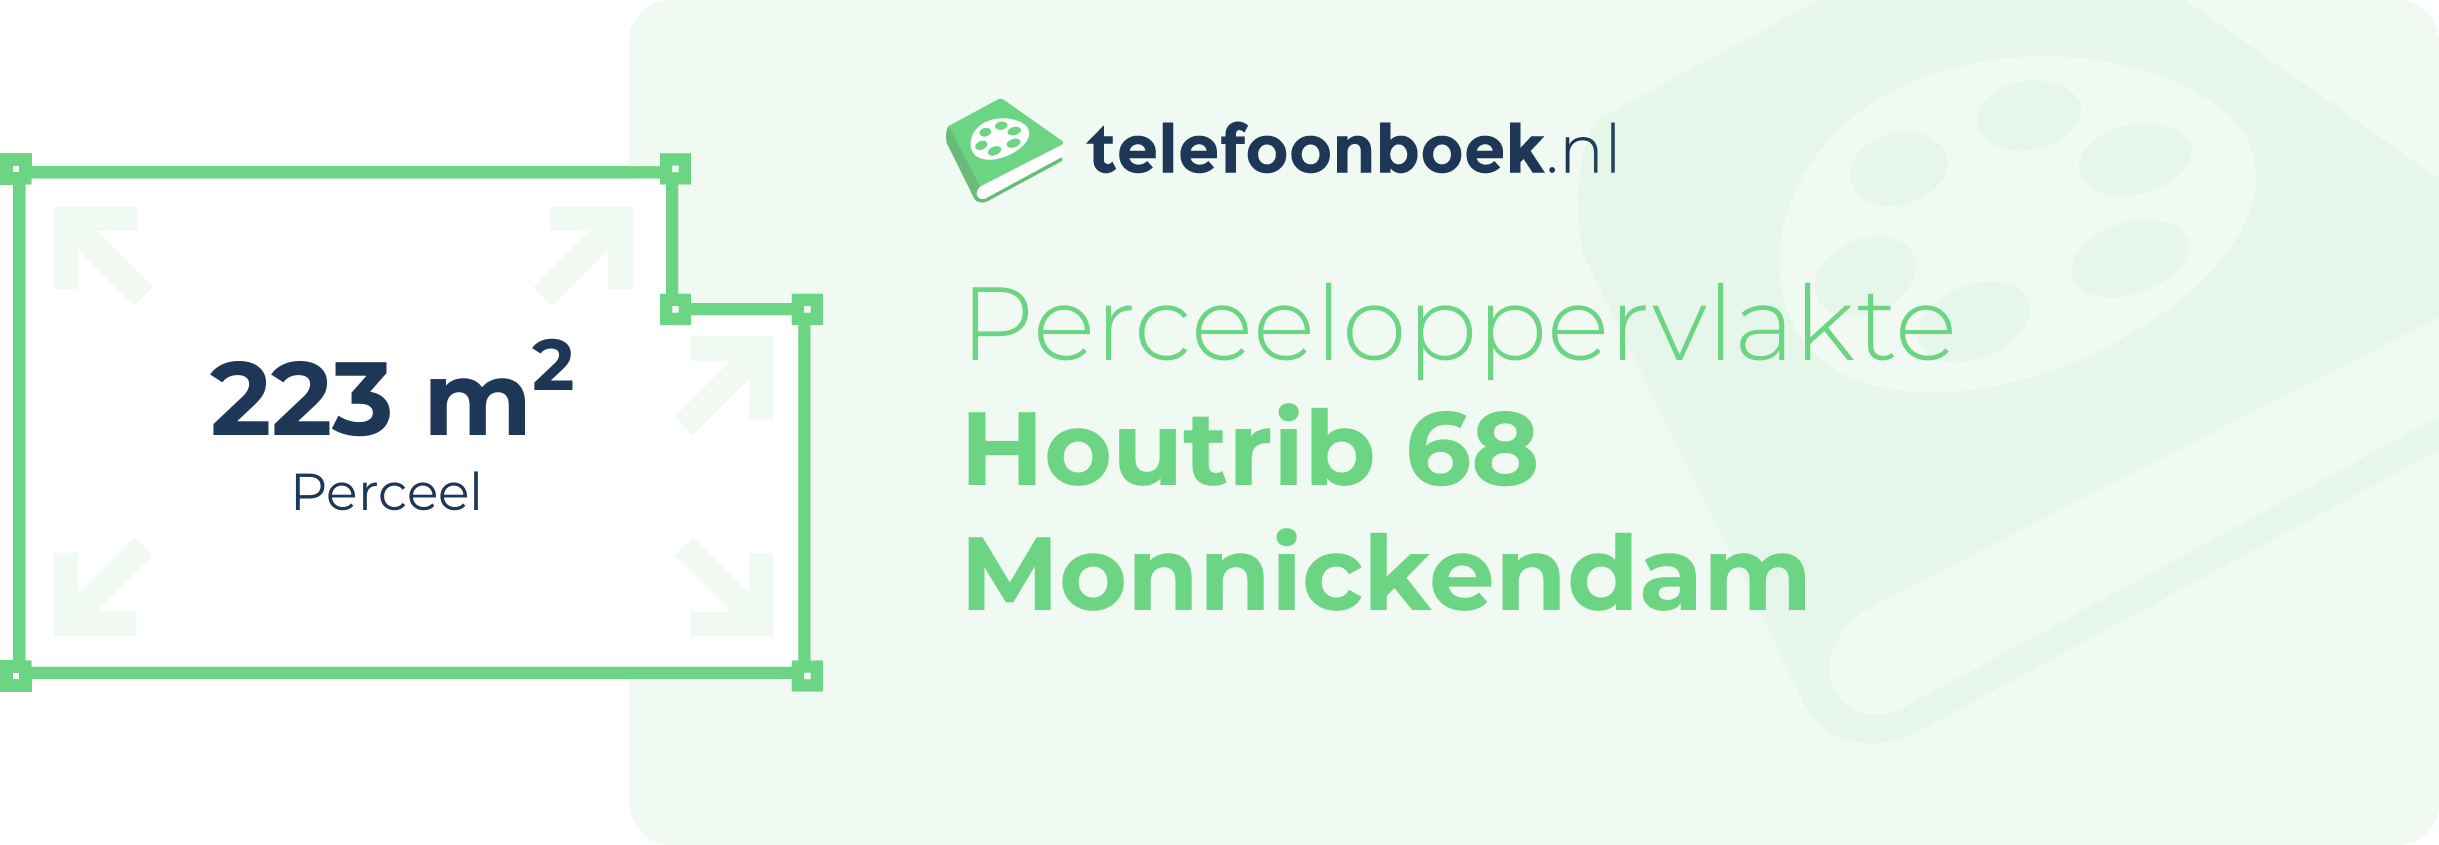 Perceeloppervlakte Houtrib 68 Monnickendam